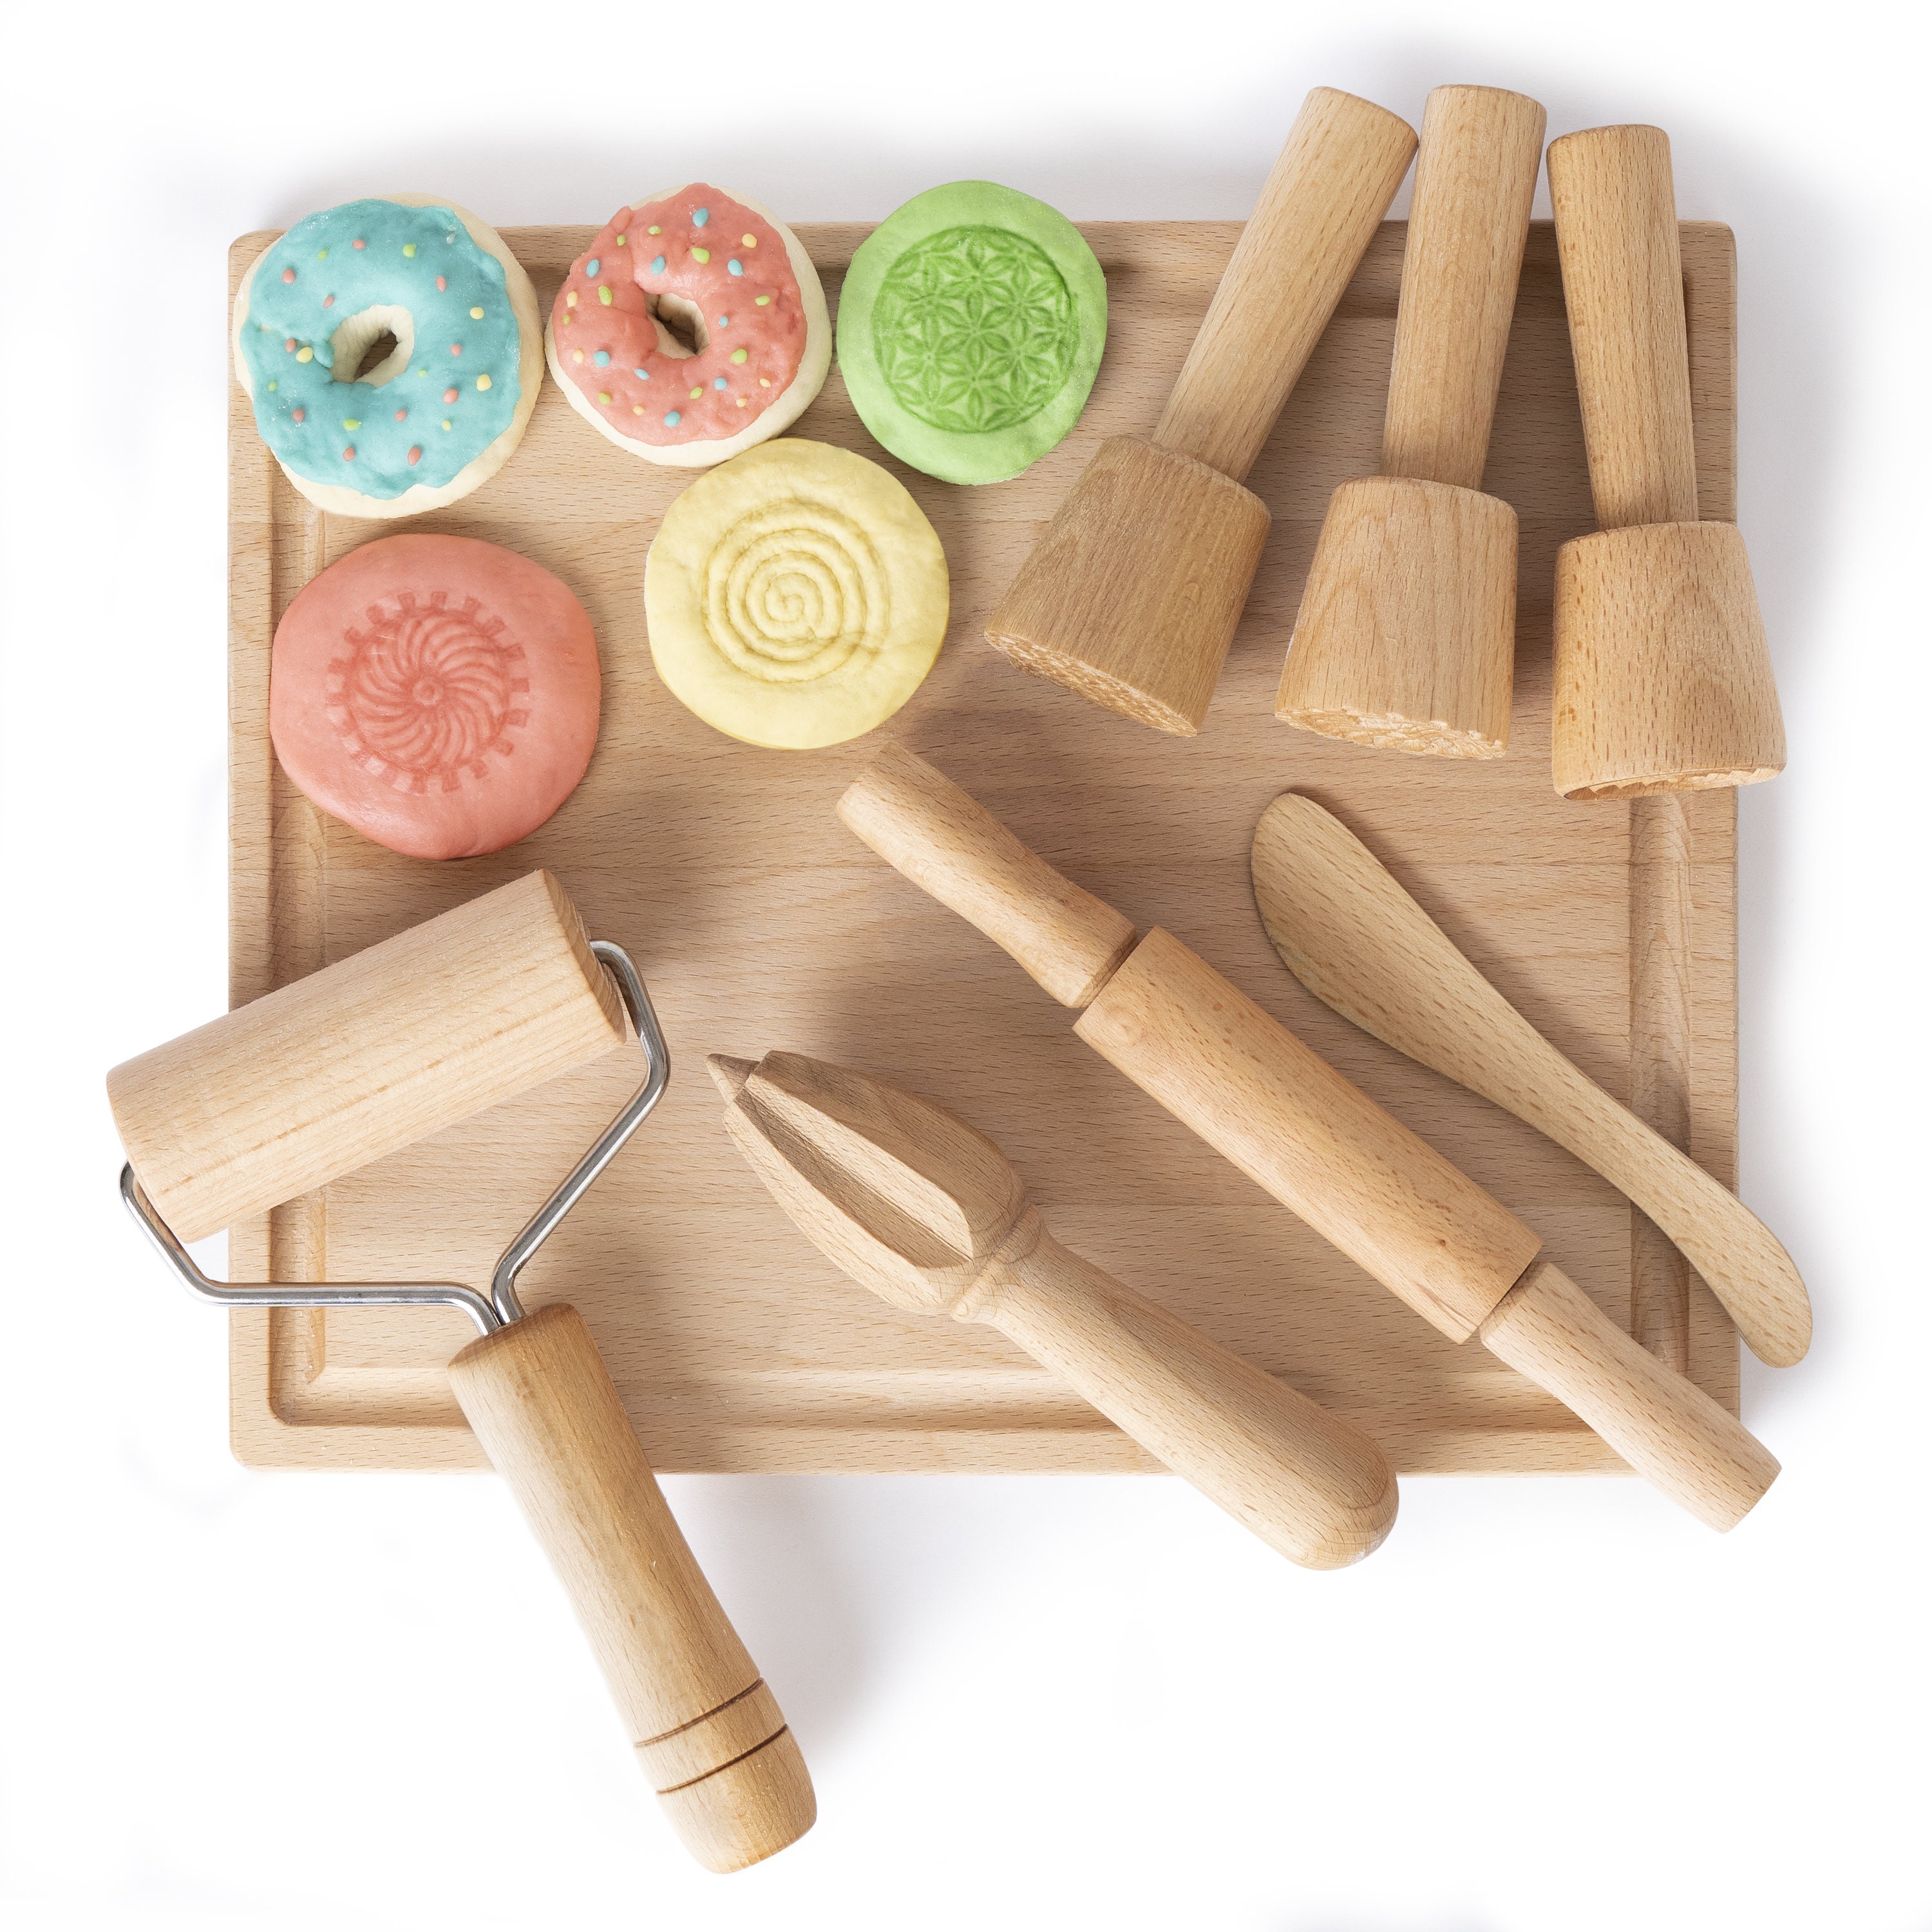 Play Dough Wooden Tool Set With Mats